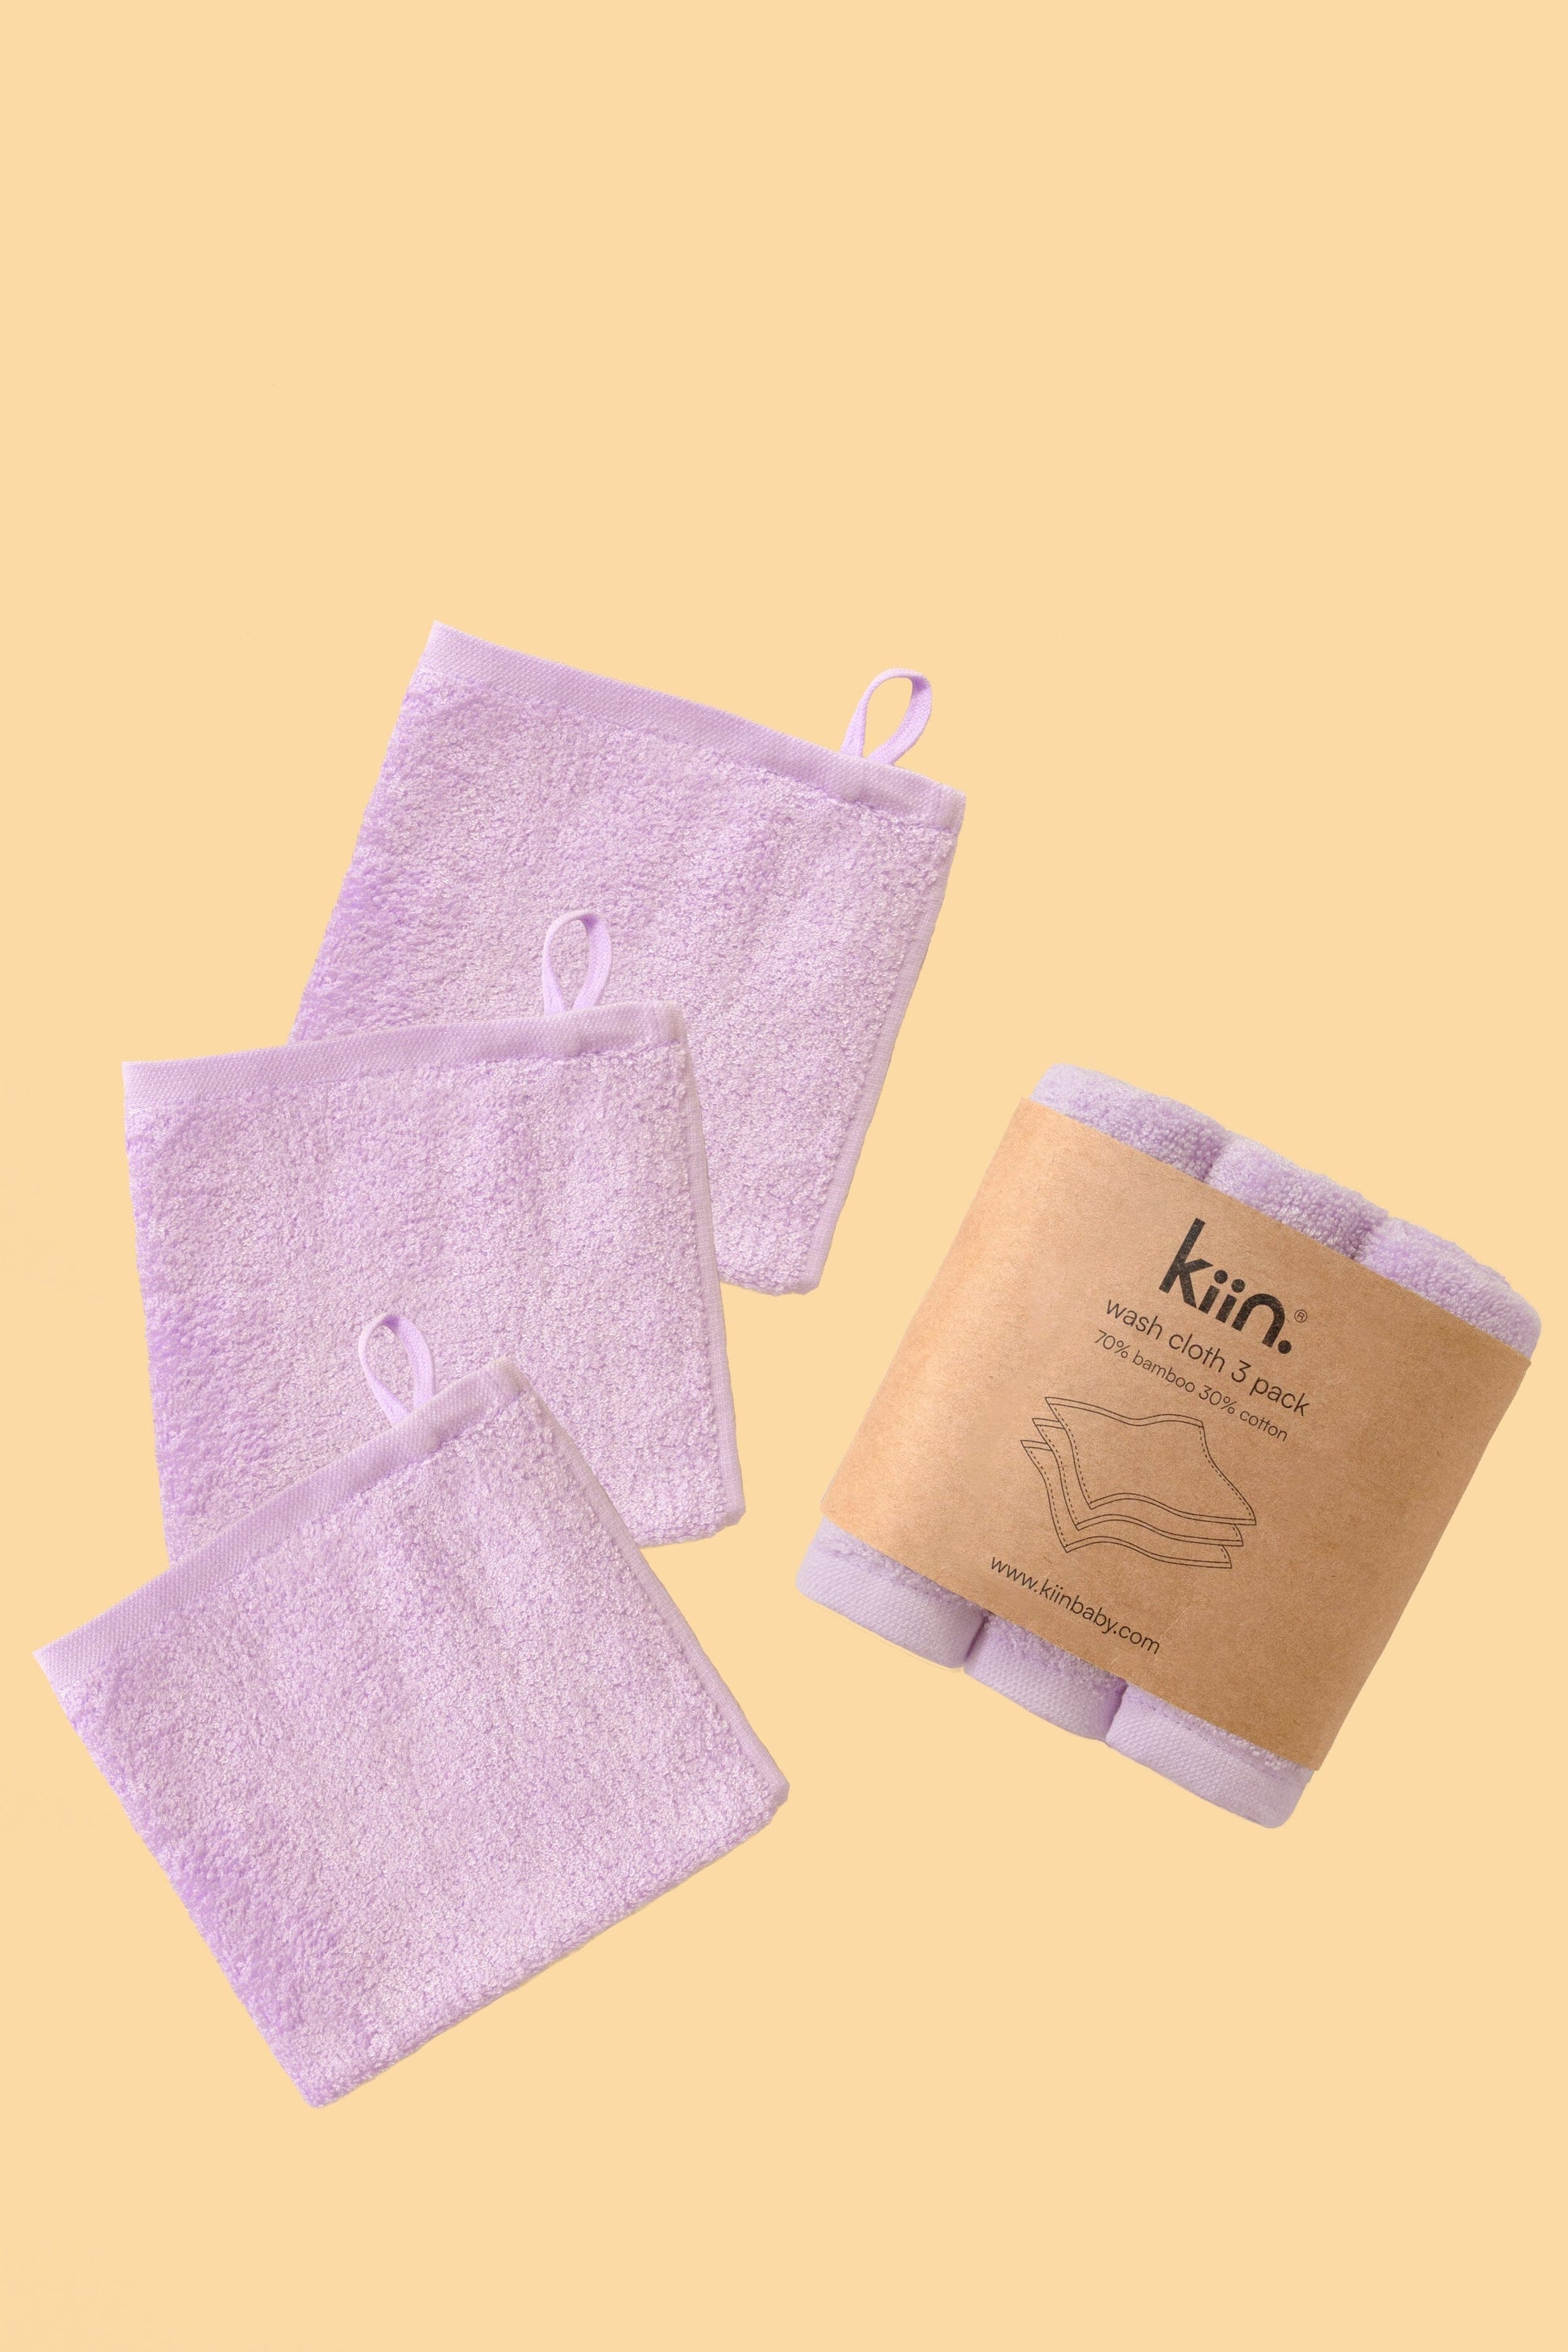 Wash Cloths 3 Pack Towels + Wash Cloths Kiin ® Lilac 